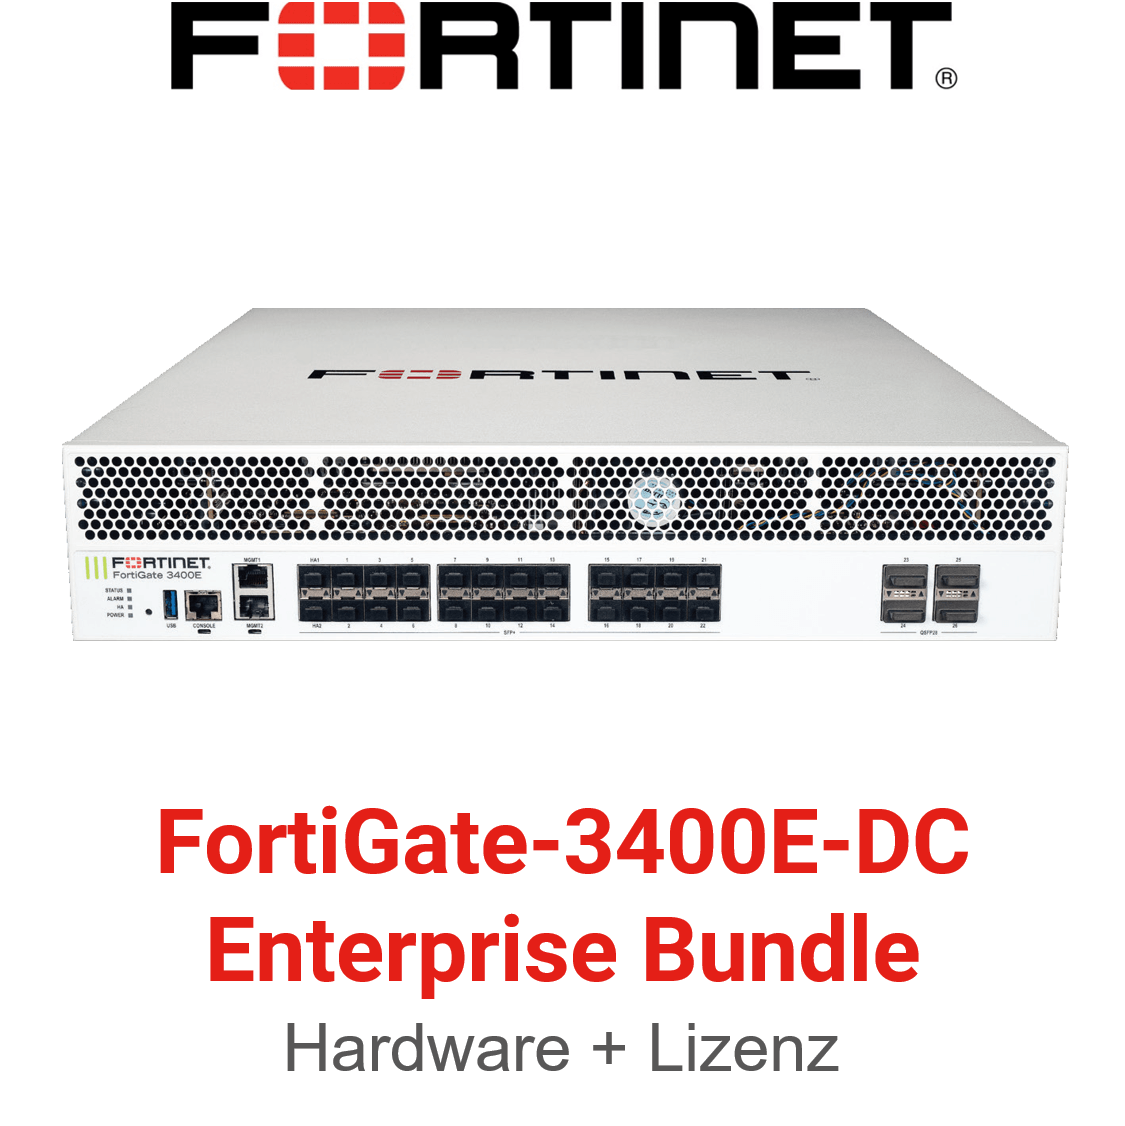 Fortinet FortiGate-3400E-DC - Enterprise Bundle (Hardware + Lizenz)